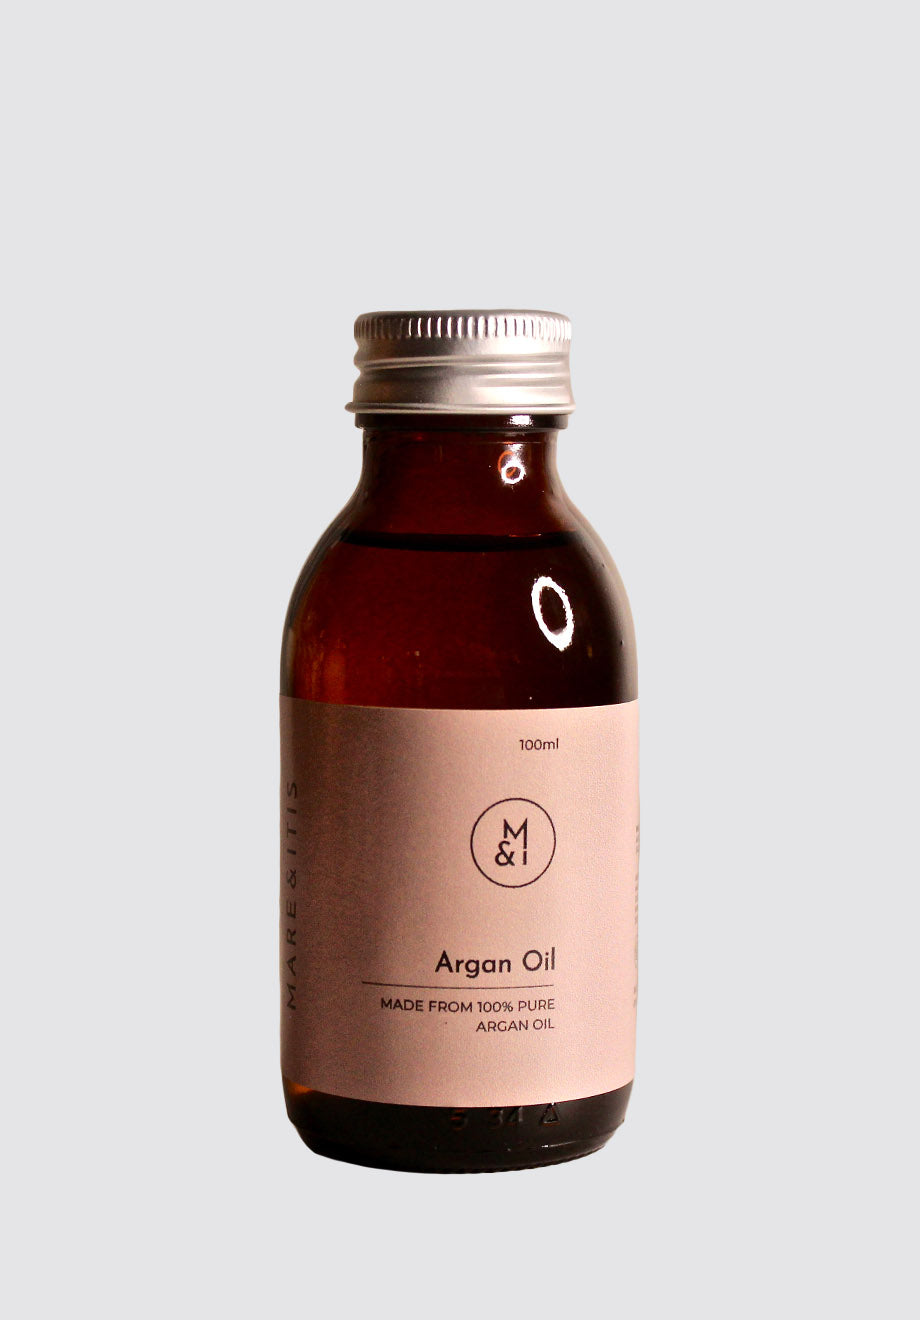 Argan Oil